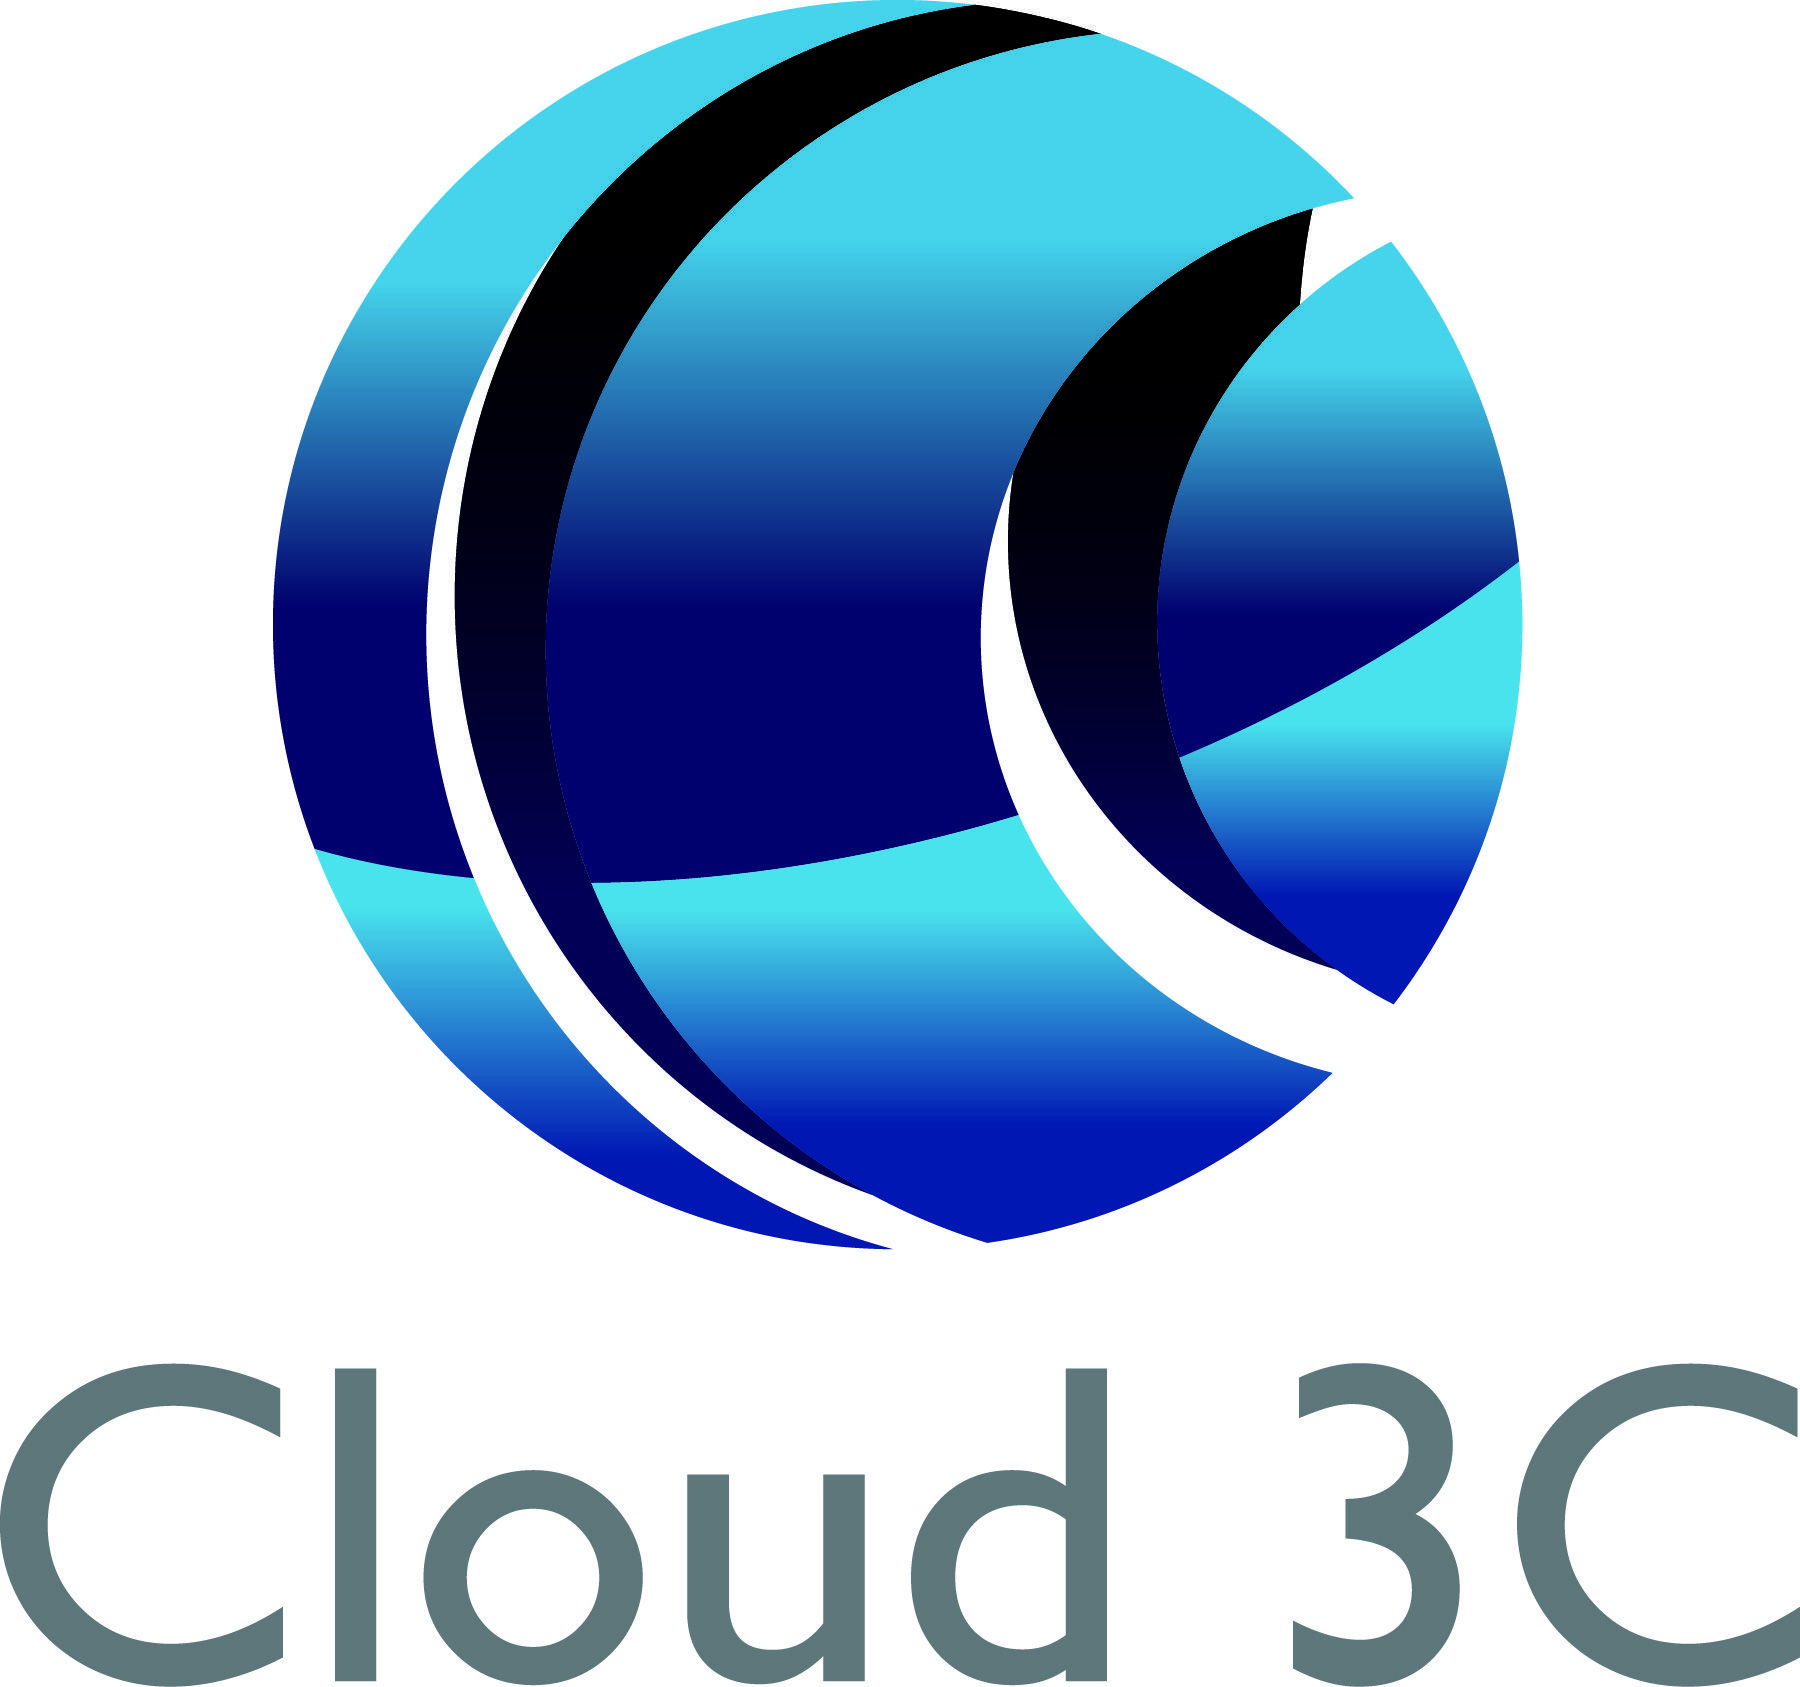 3C Logo - Cloud 3C Logo